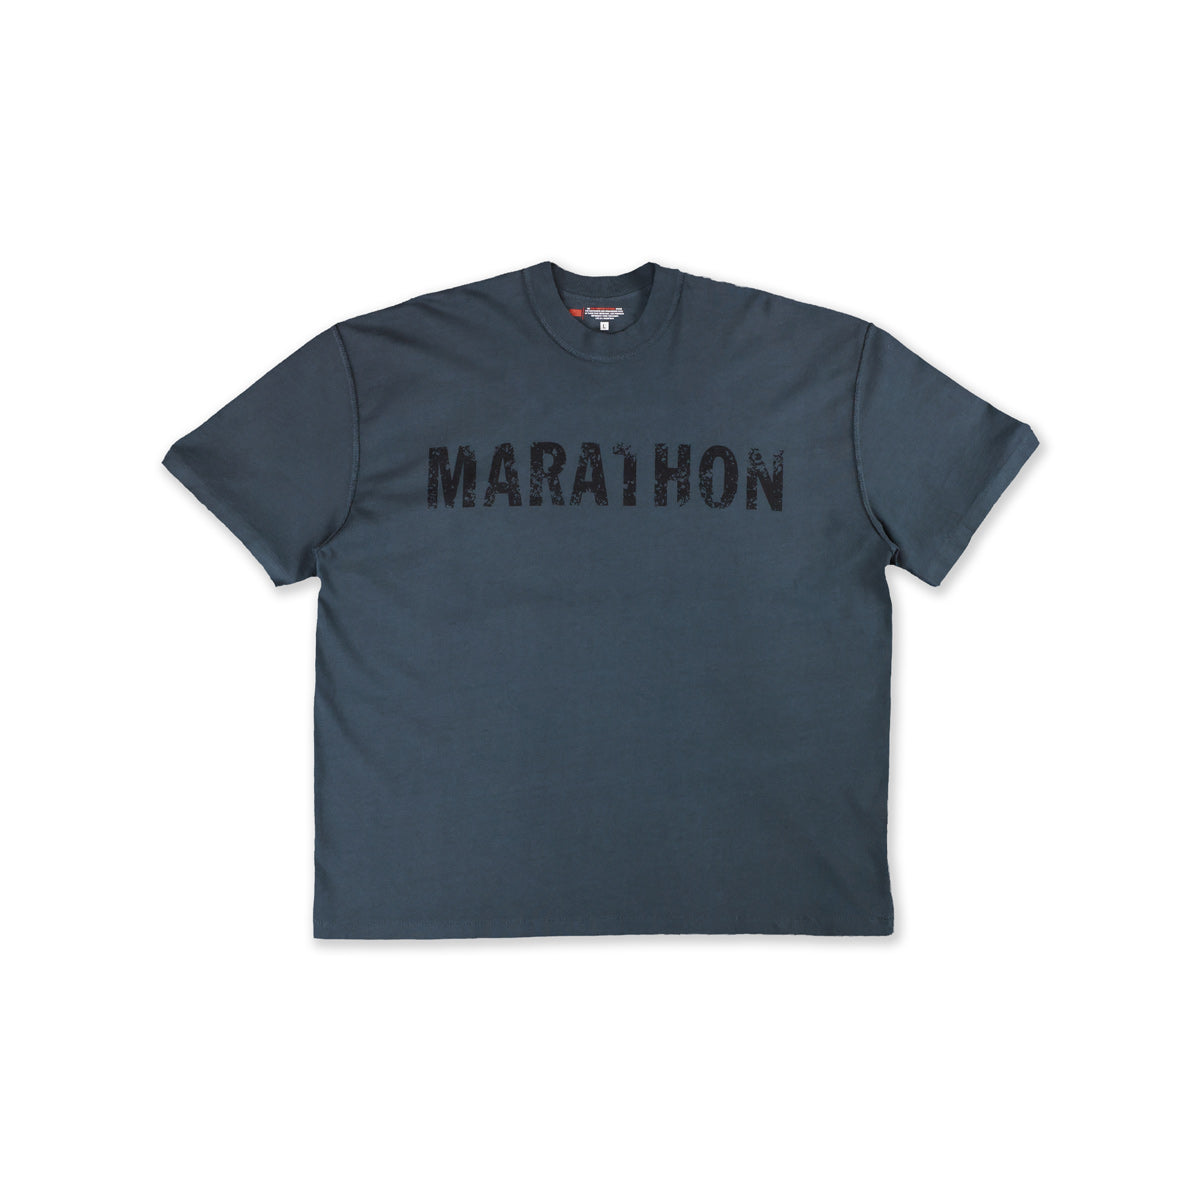 Marathon Distressed T-Shirt - Cobalt/Black - Front